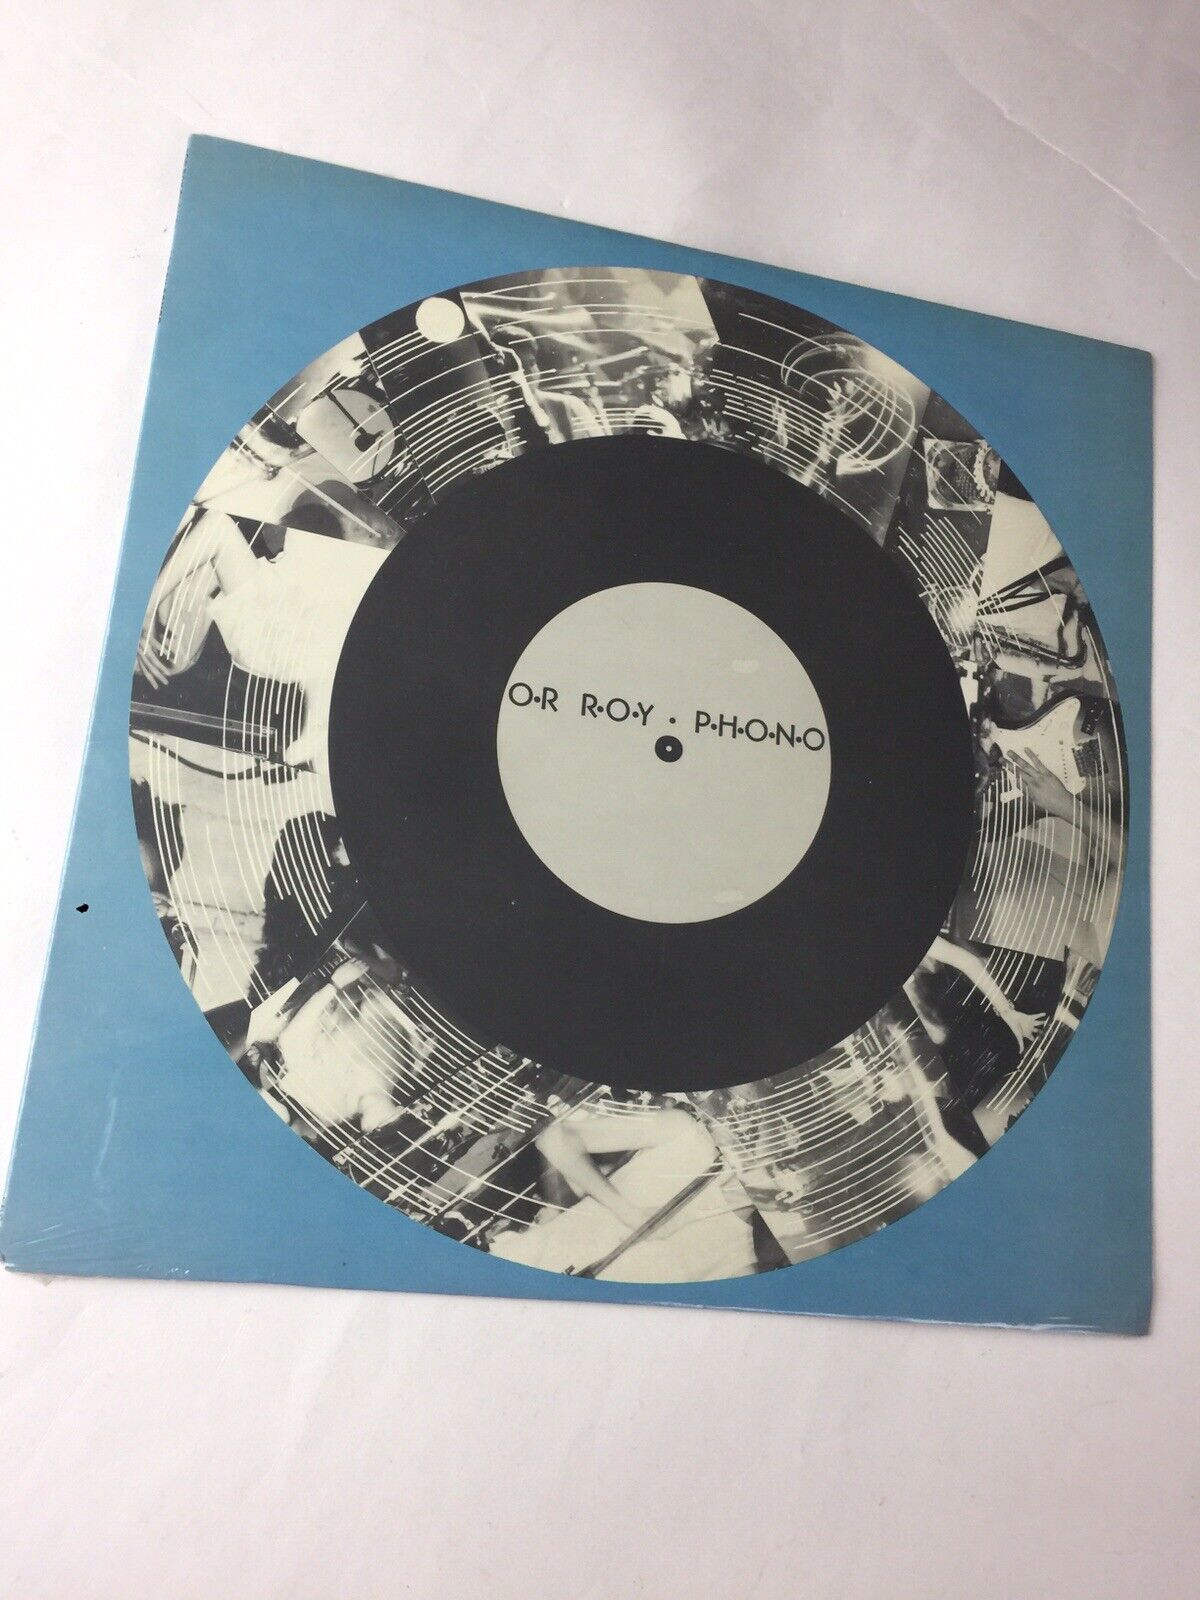 Or Roy Phono Fake Doom Records LP New Sealed